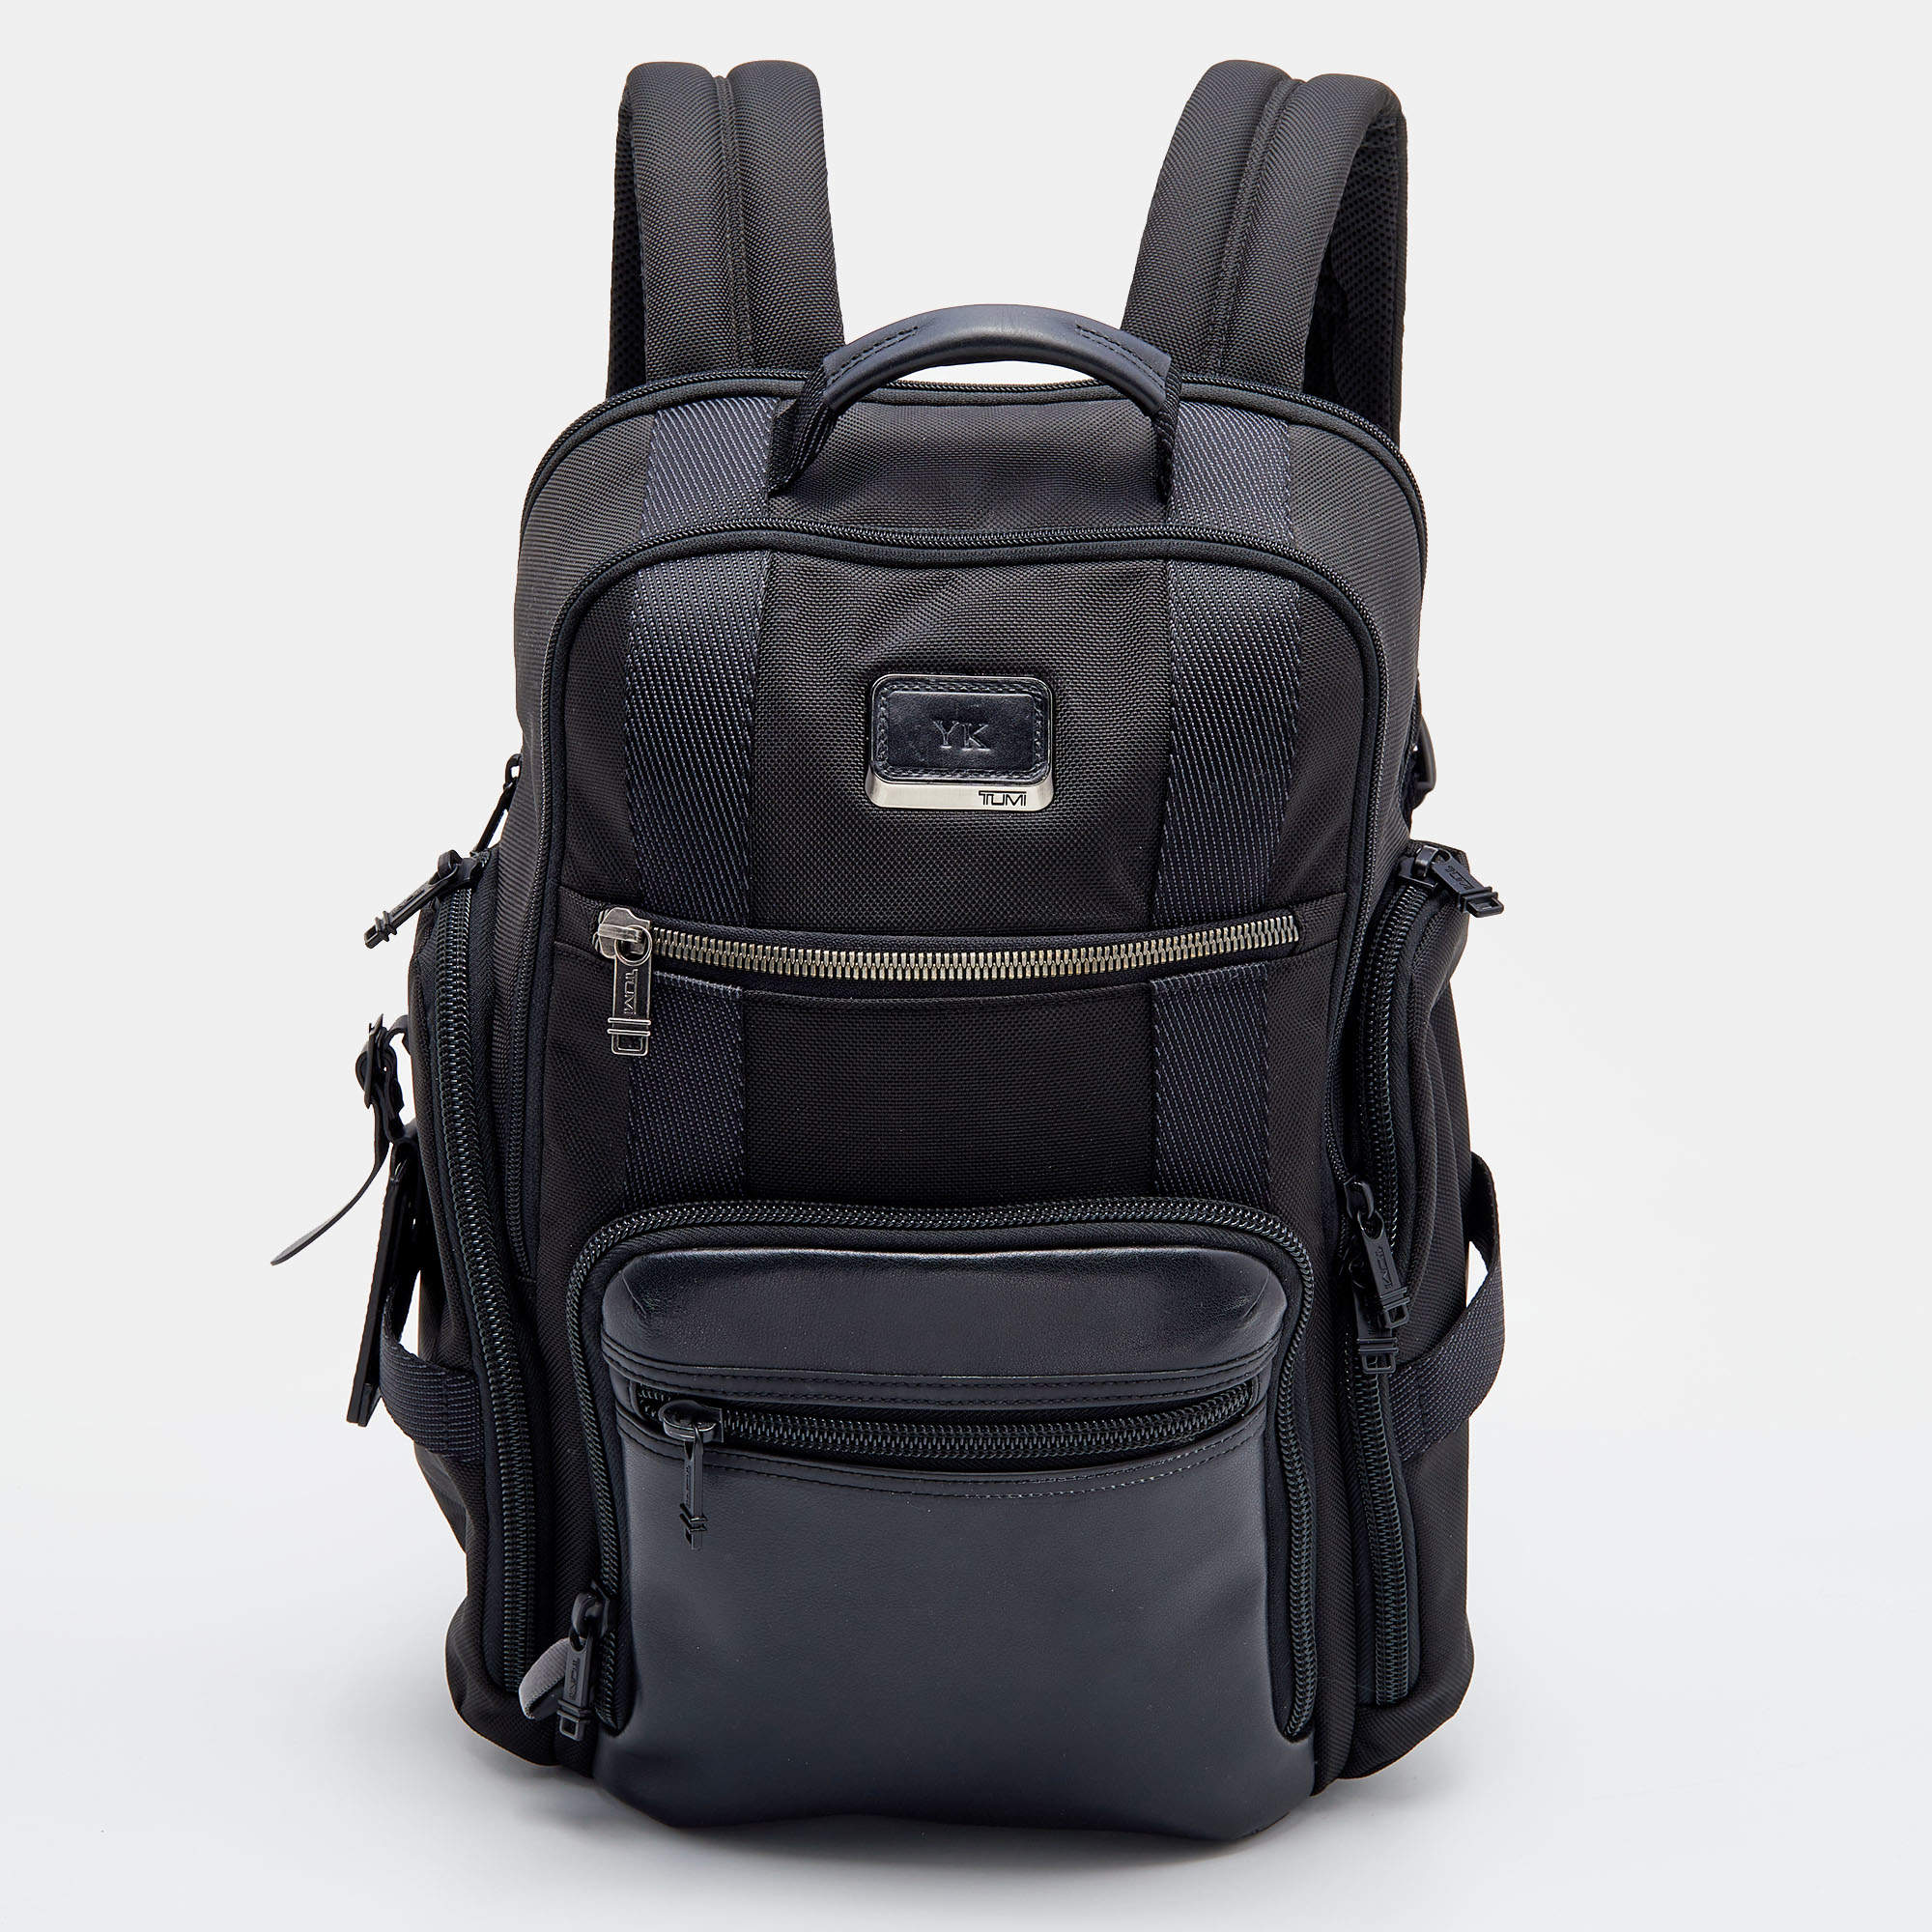 TUMI Black Nylon and Leather Backpack